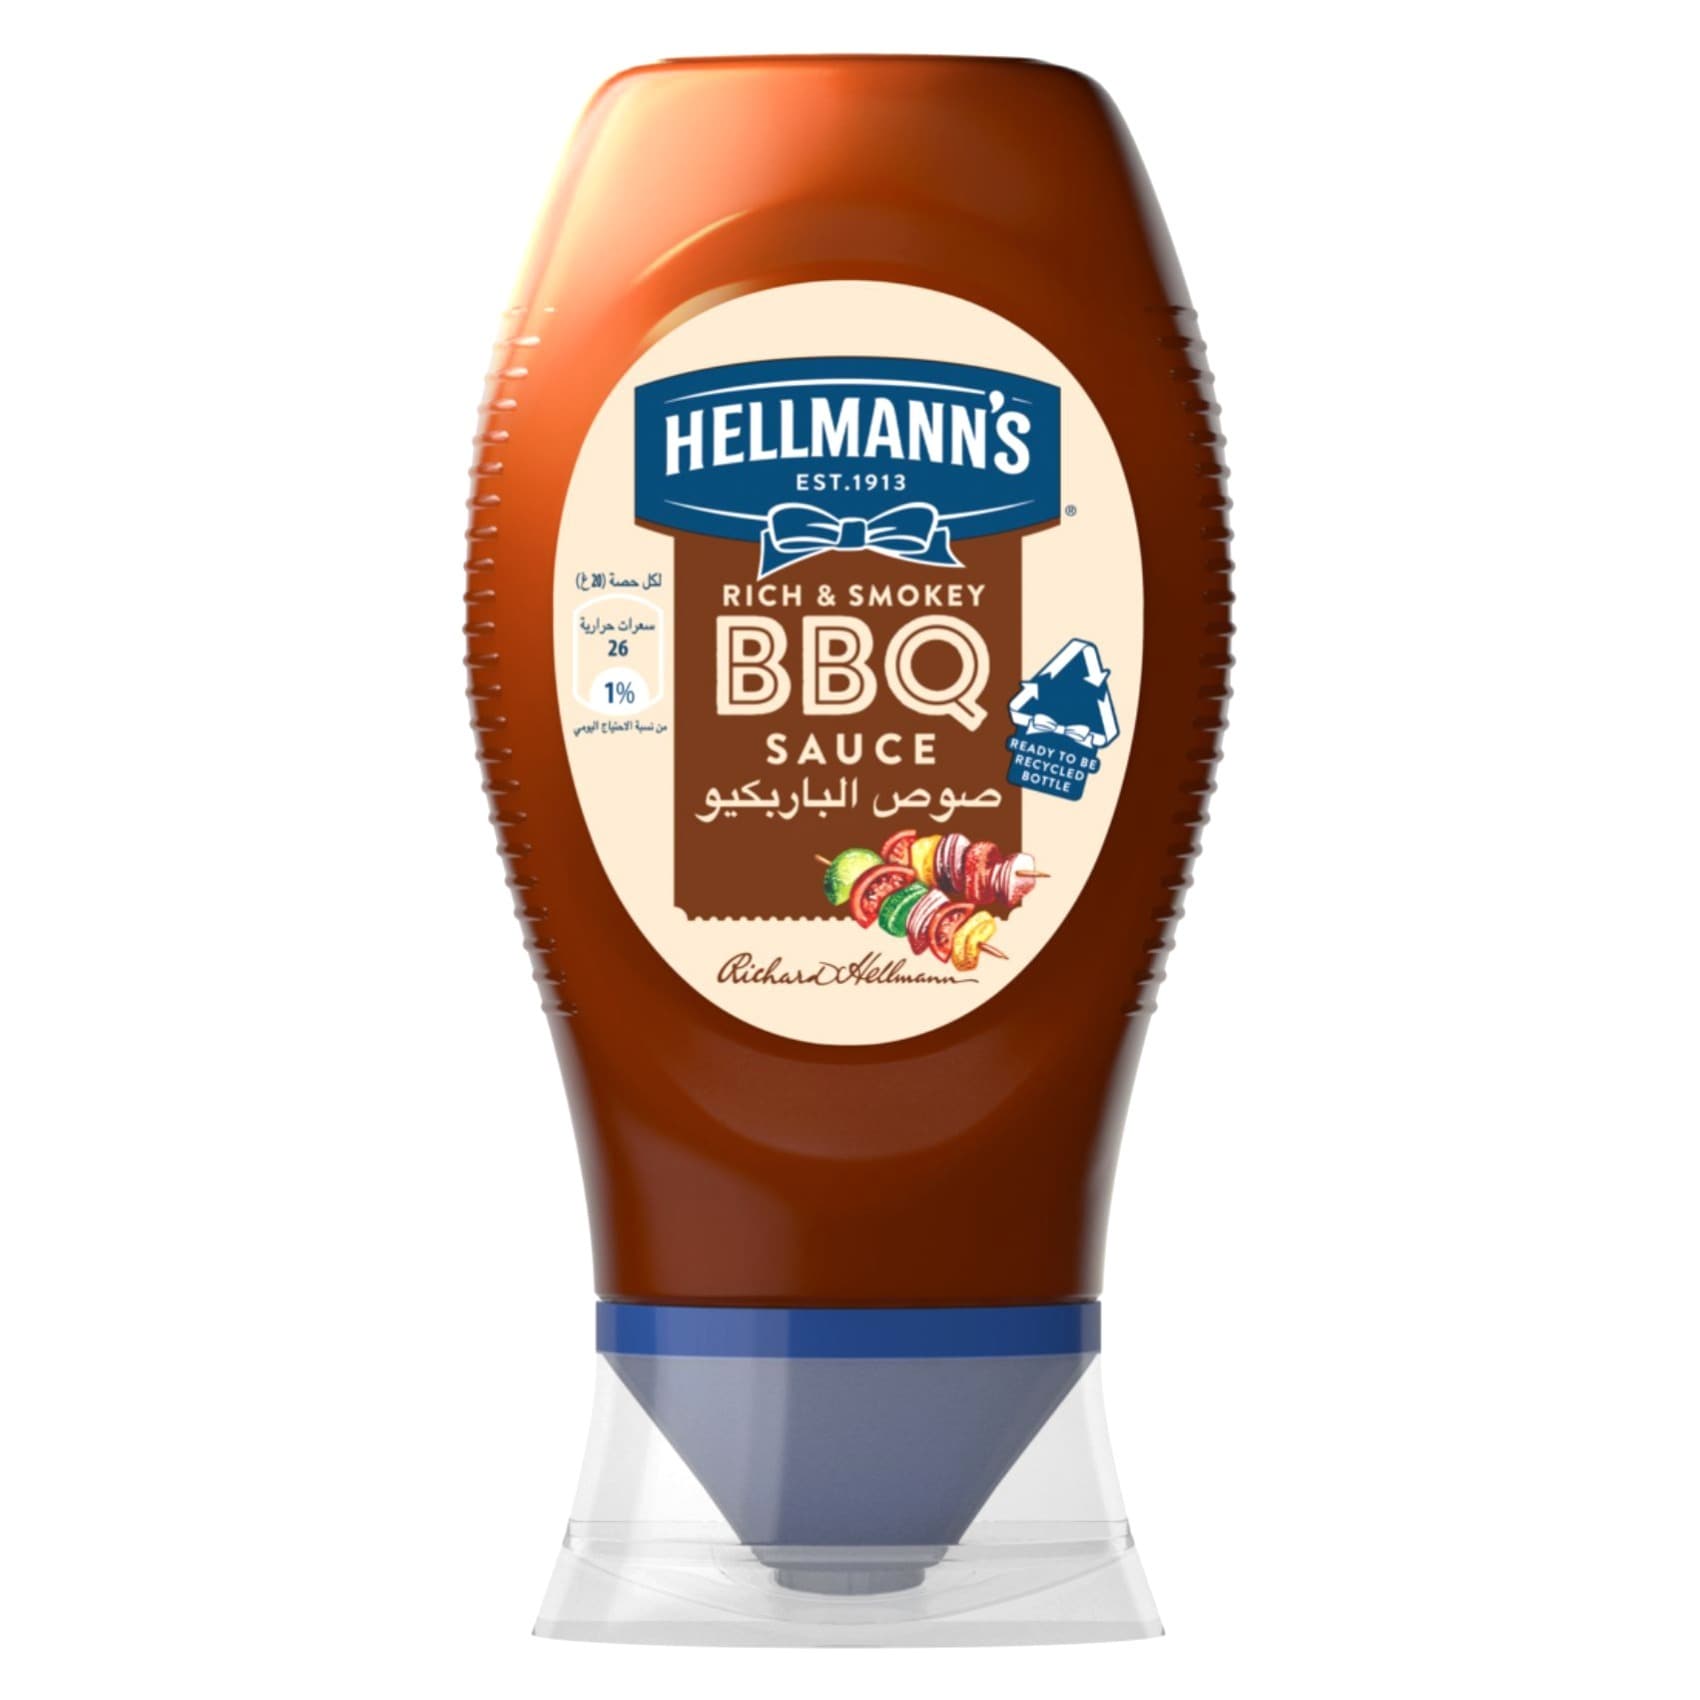 Hellmann's unveils first mustard and new Smokey BBQ sauce, News